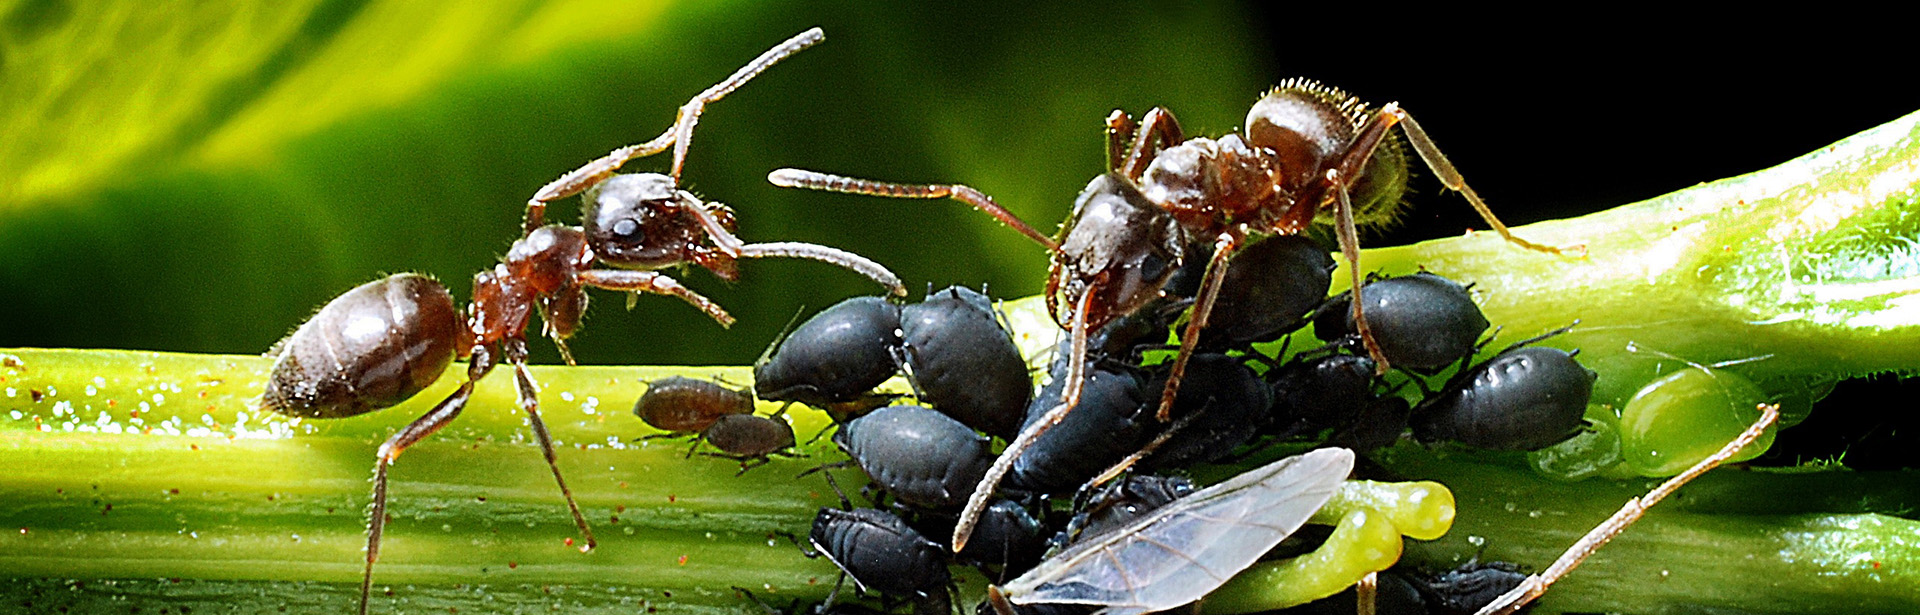 image-bandeau-interne-desinsectisation-fourmis